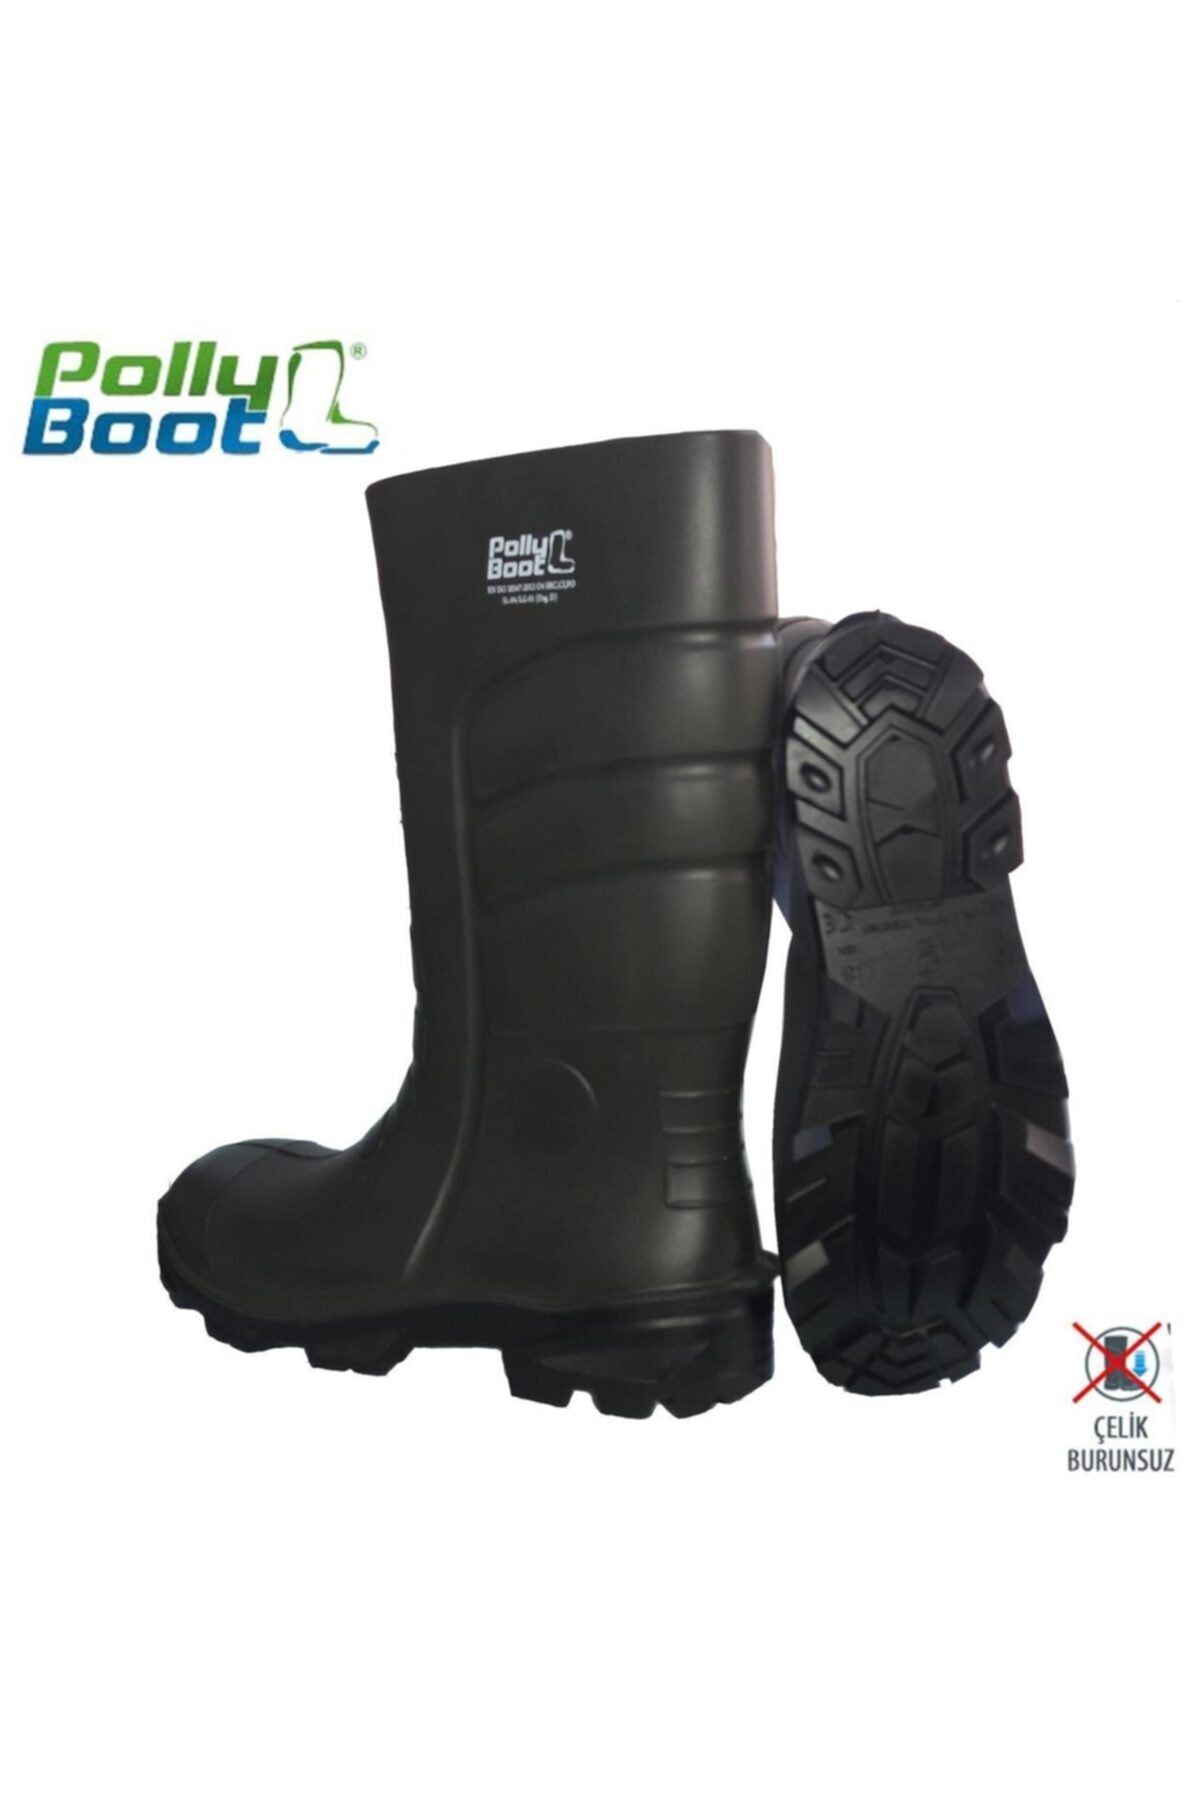 Polly Boot Beta 42 Numara Poliüratan Çizme